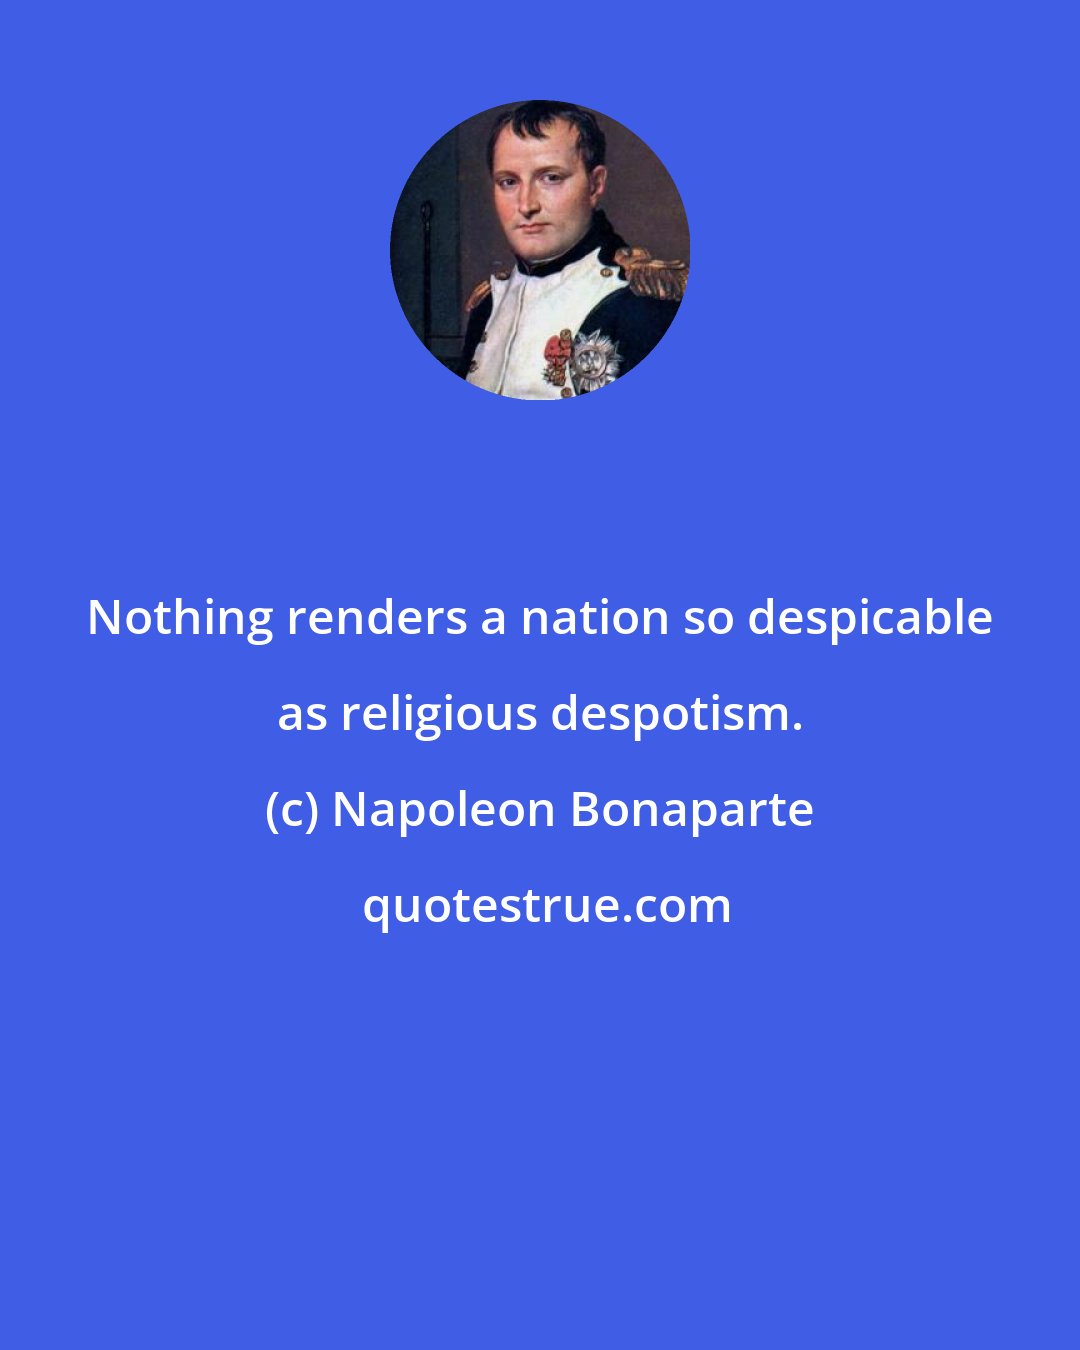 Napoleon Bonaparte: Nothing renders a nation so despicable as religious despotism.